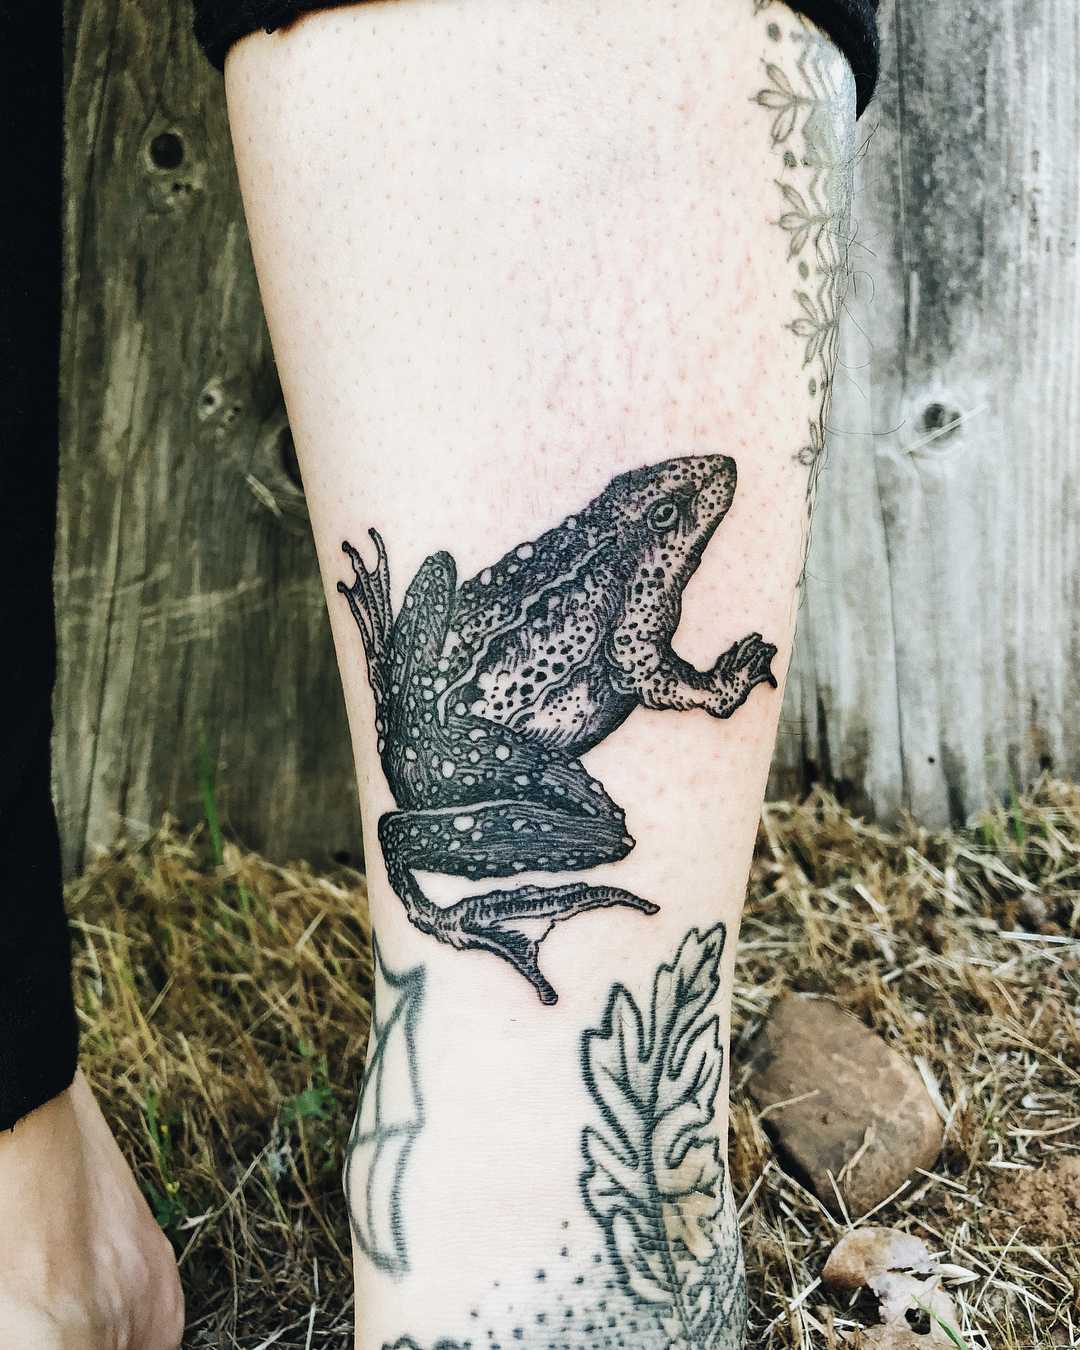 Frog tattoo on the shin